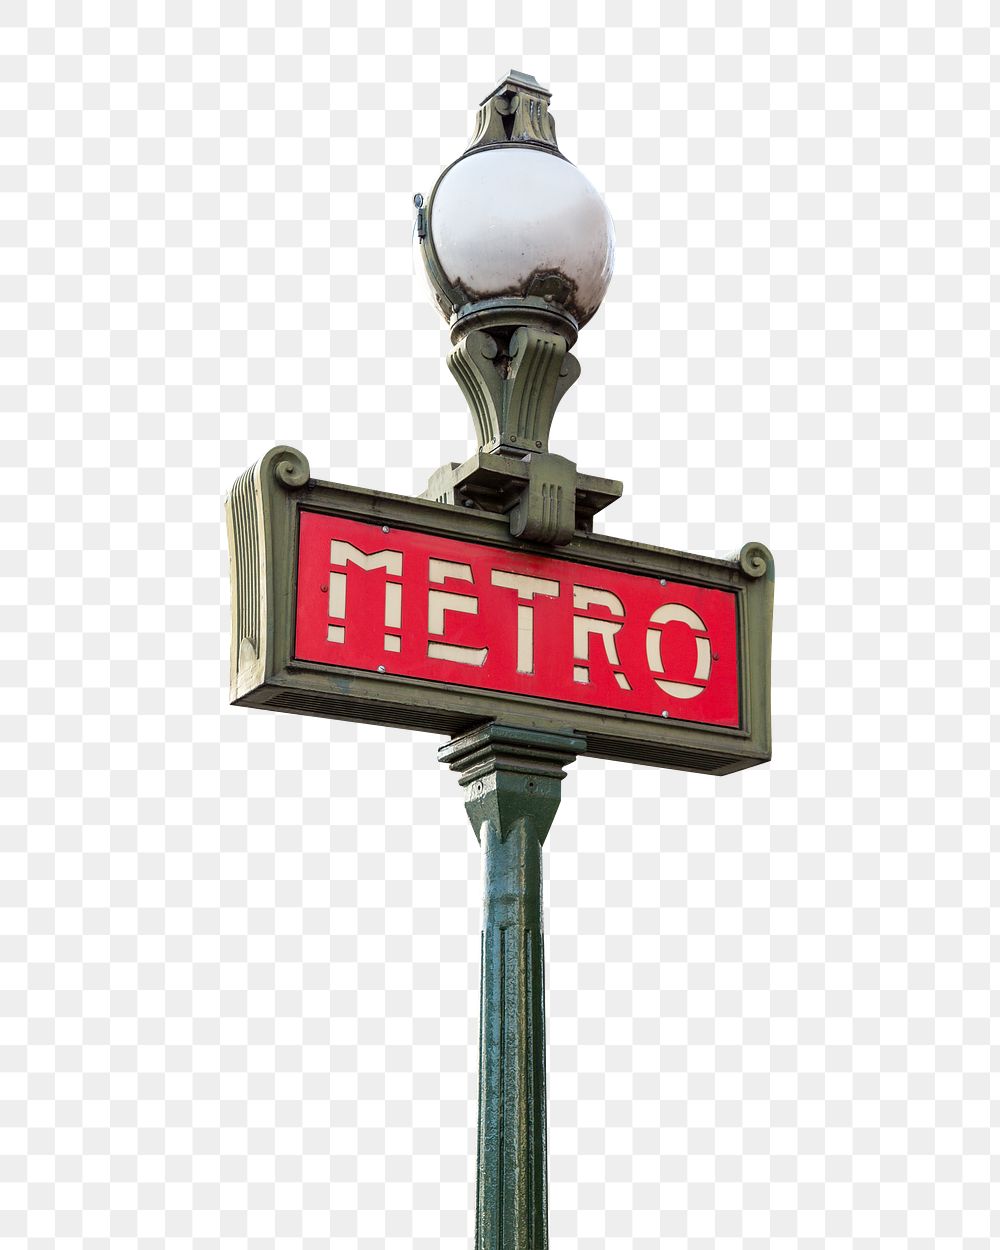 Metro sign png, transparent background